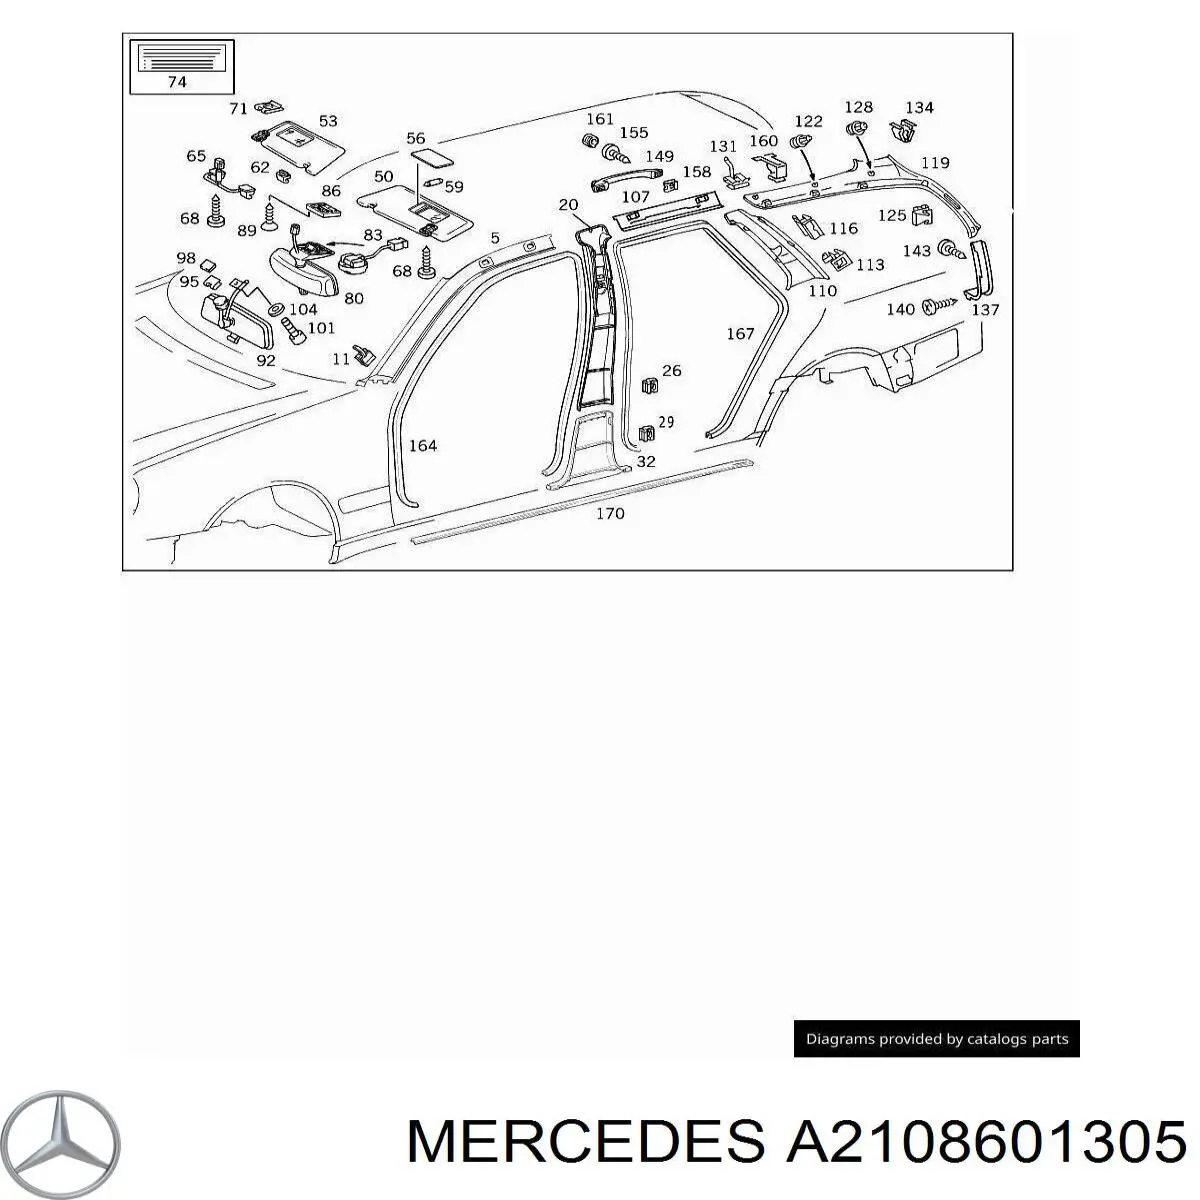 A2108601305 Mercedes airbag de cortina lateral izquierda